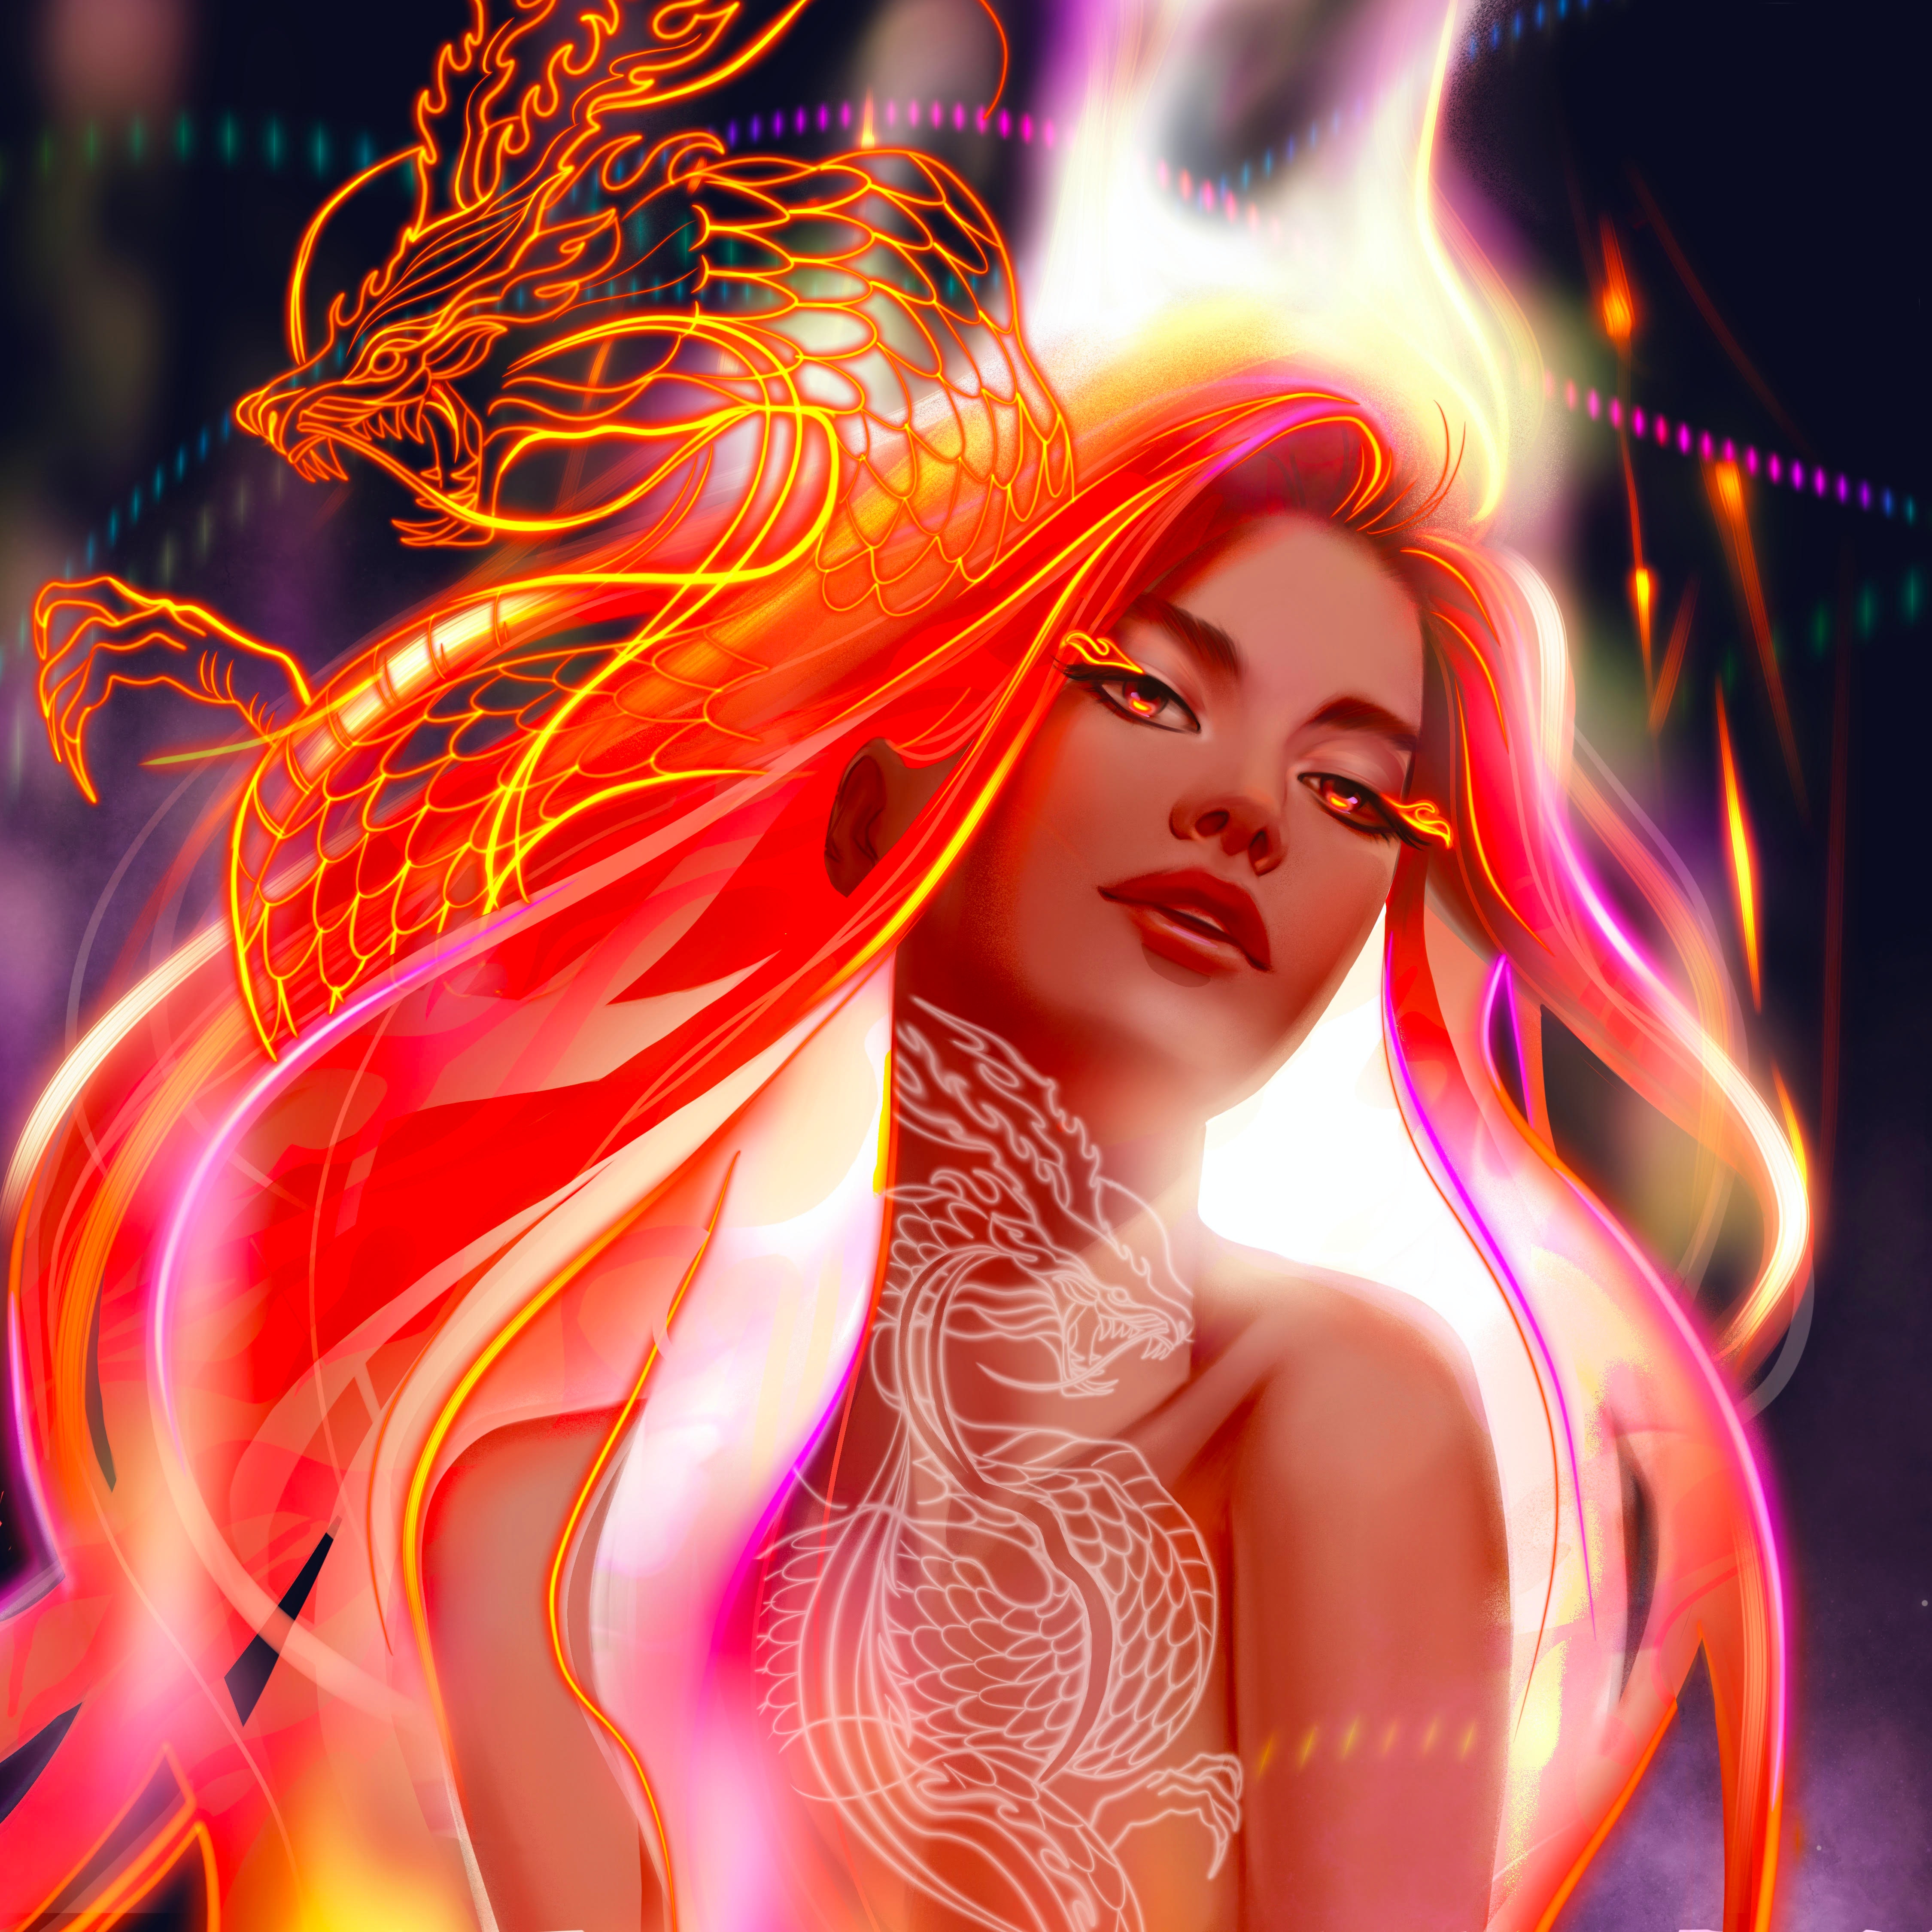 Digital Digital Art Artwork Render Women Looking At Viewer Fantasy Art Fantasy Girl Redhead Dragon L 4500x4500